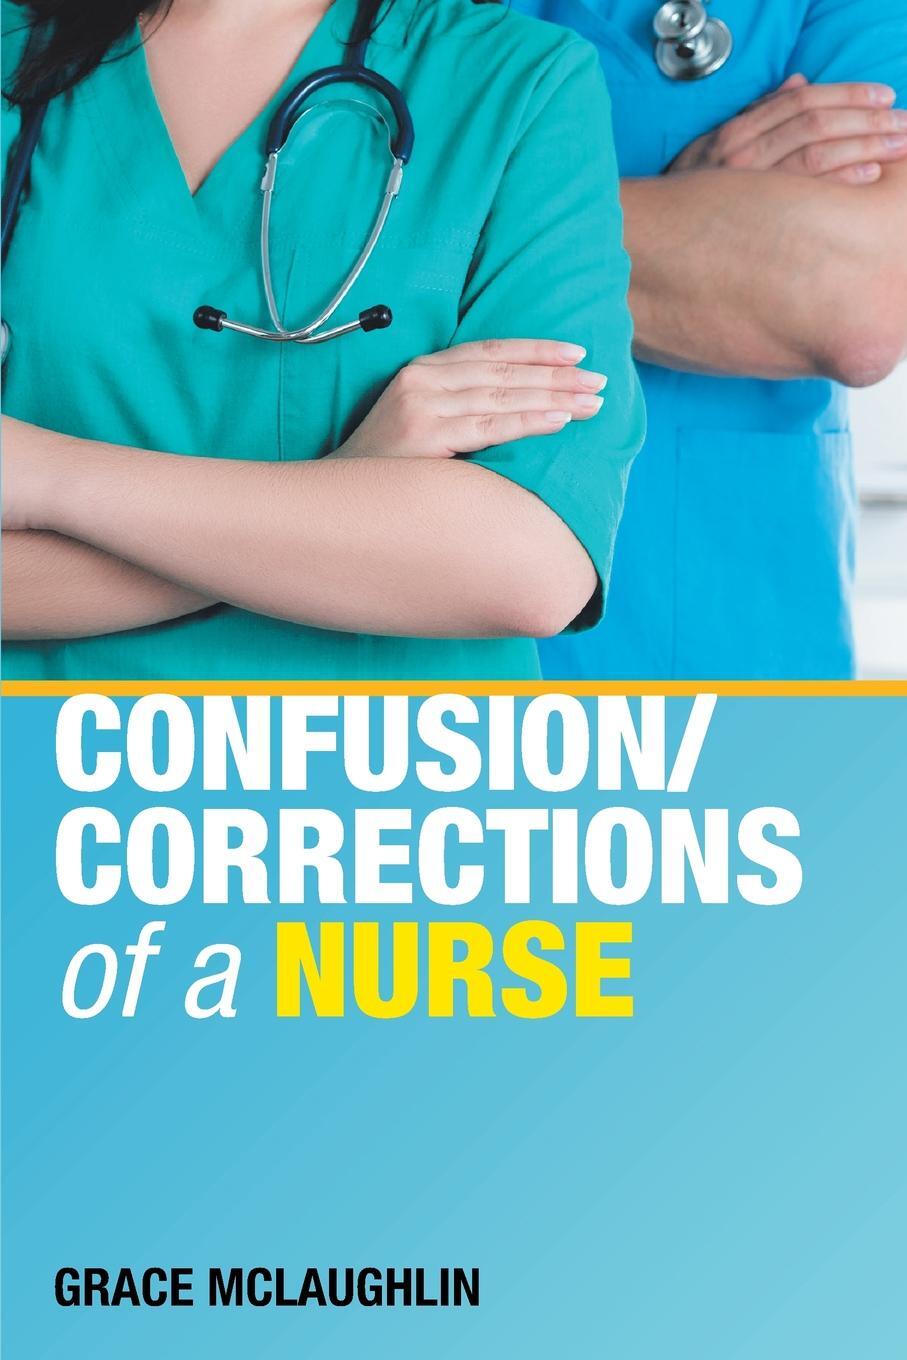 фото Confusion/Corrections of a Nurse